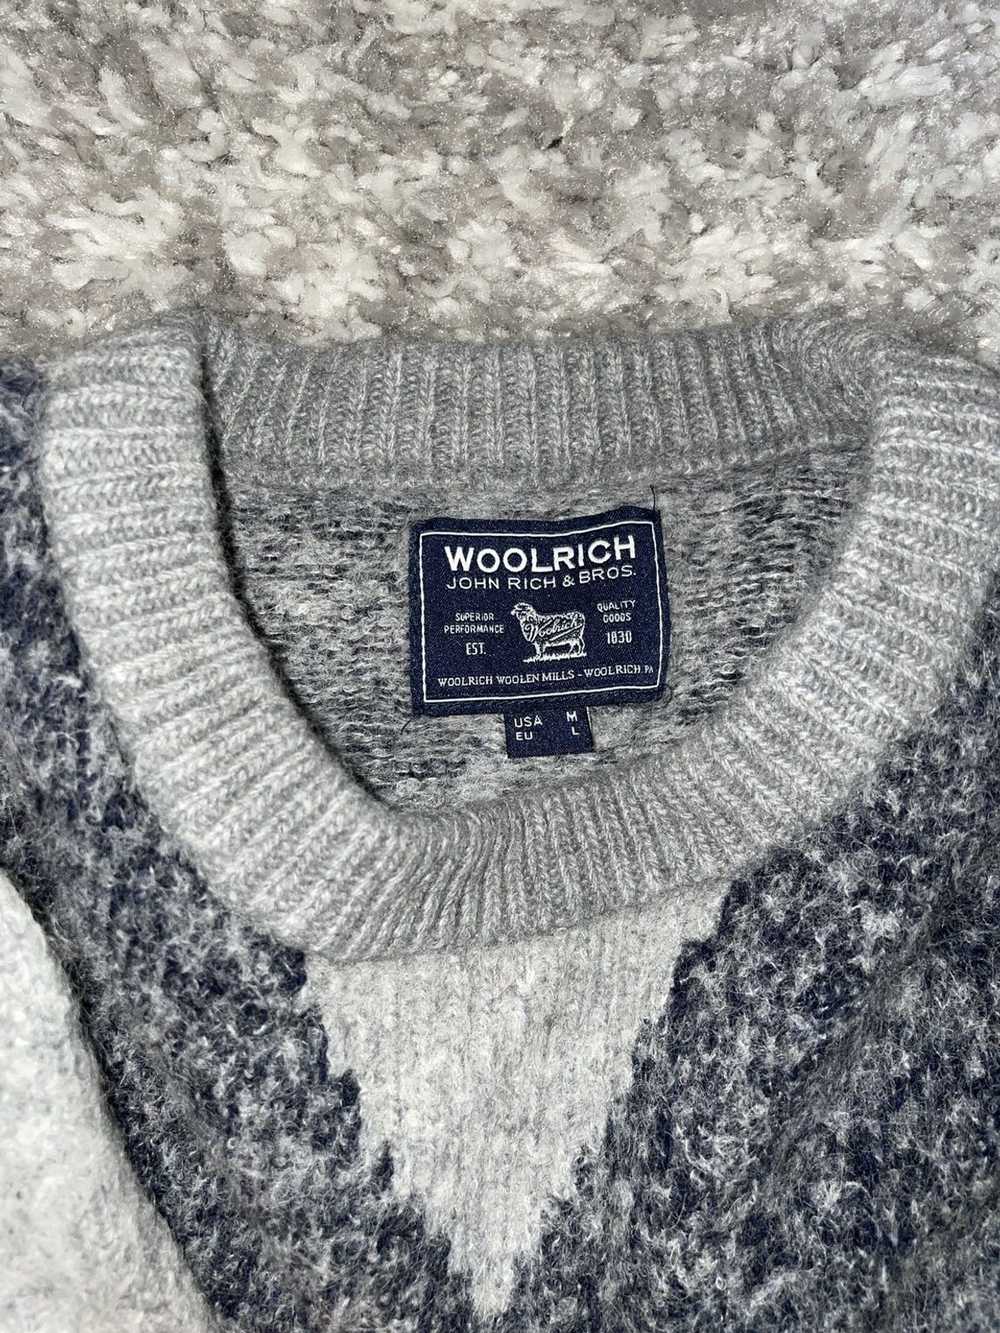 Woolrich Woolen Mills Woolrich Sweater - image 2